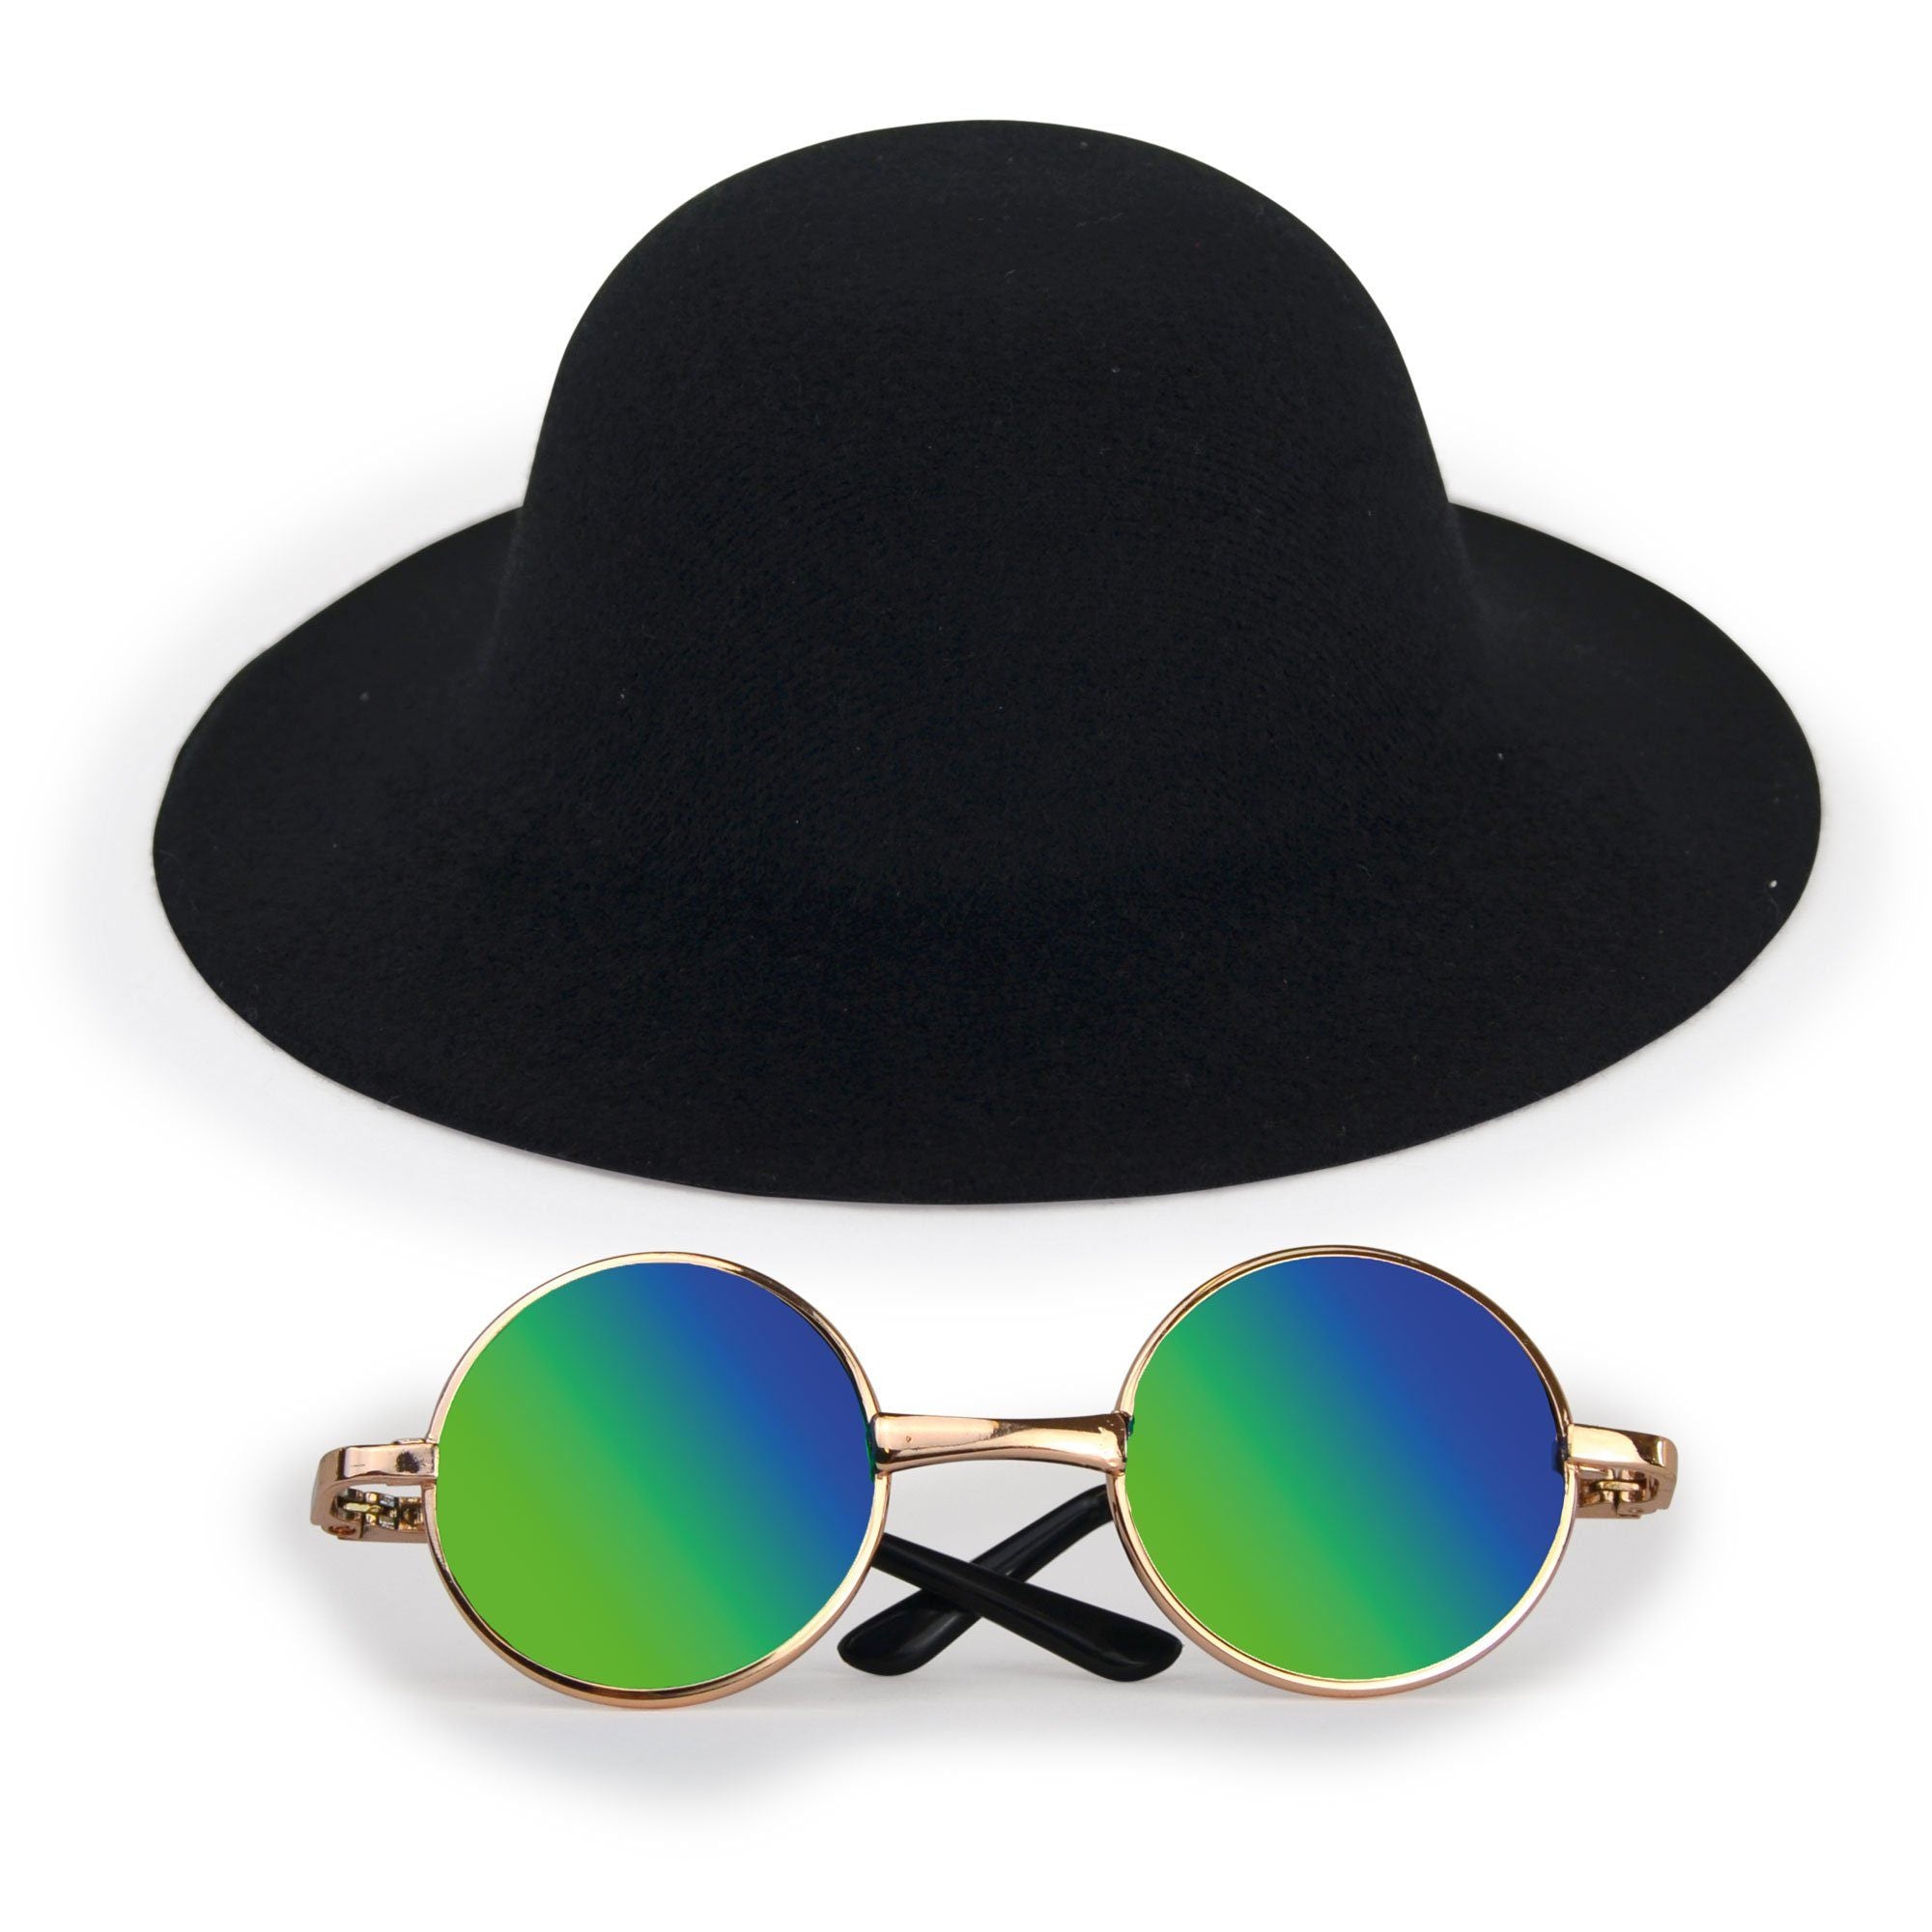 Stargazer Accessories - Hat and Sunglasses